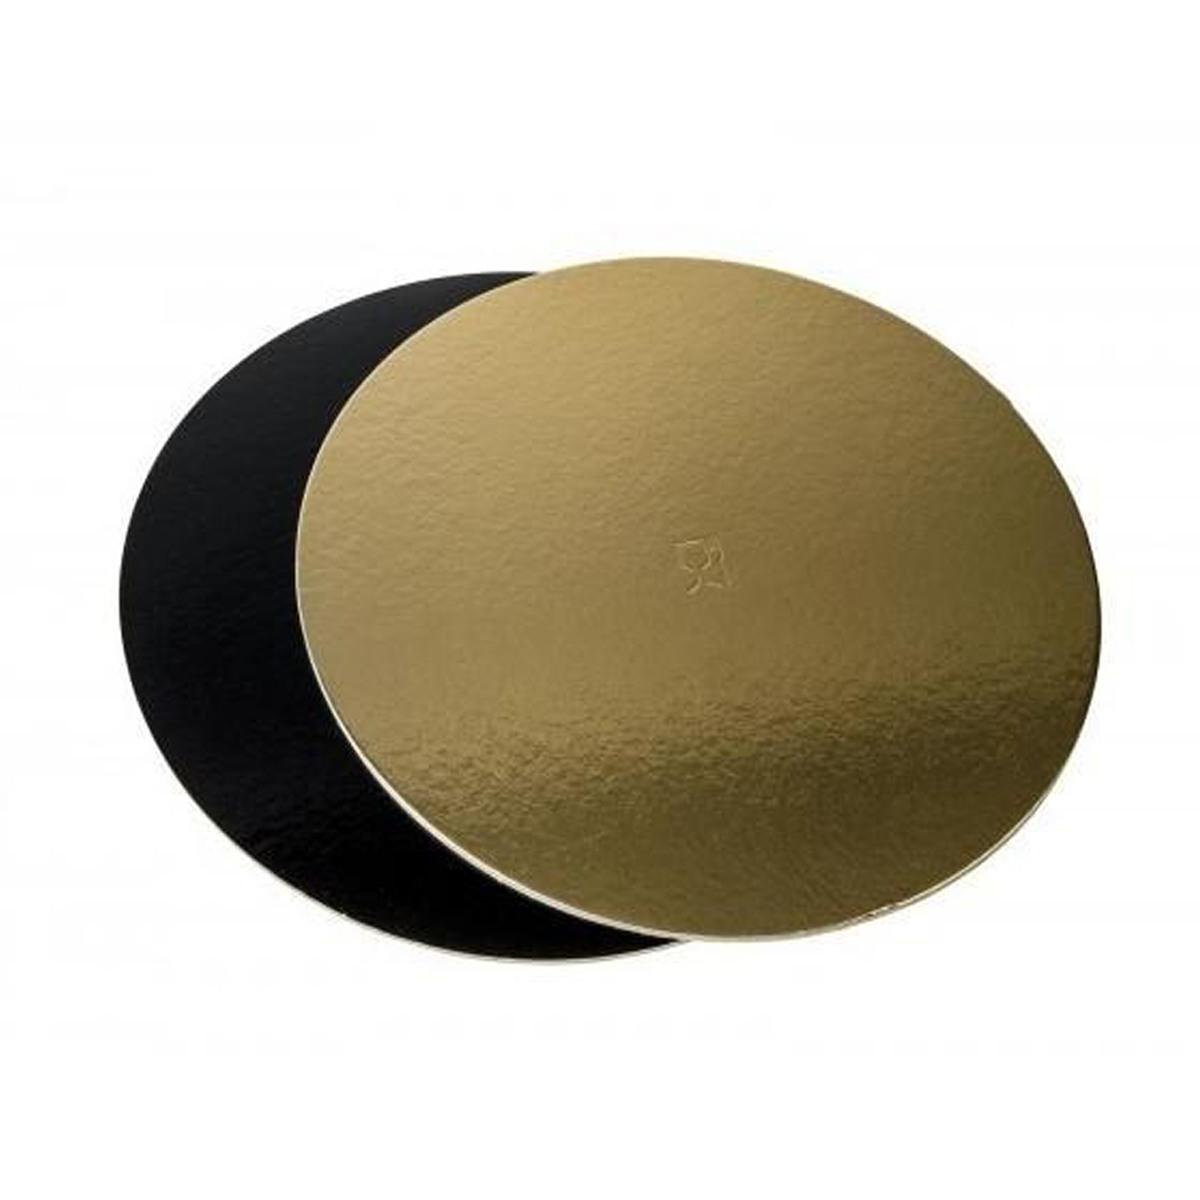 Disco nero/oro bordo liscio 10 kg n°34